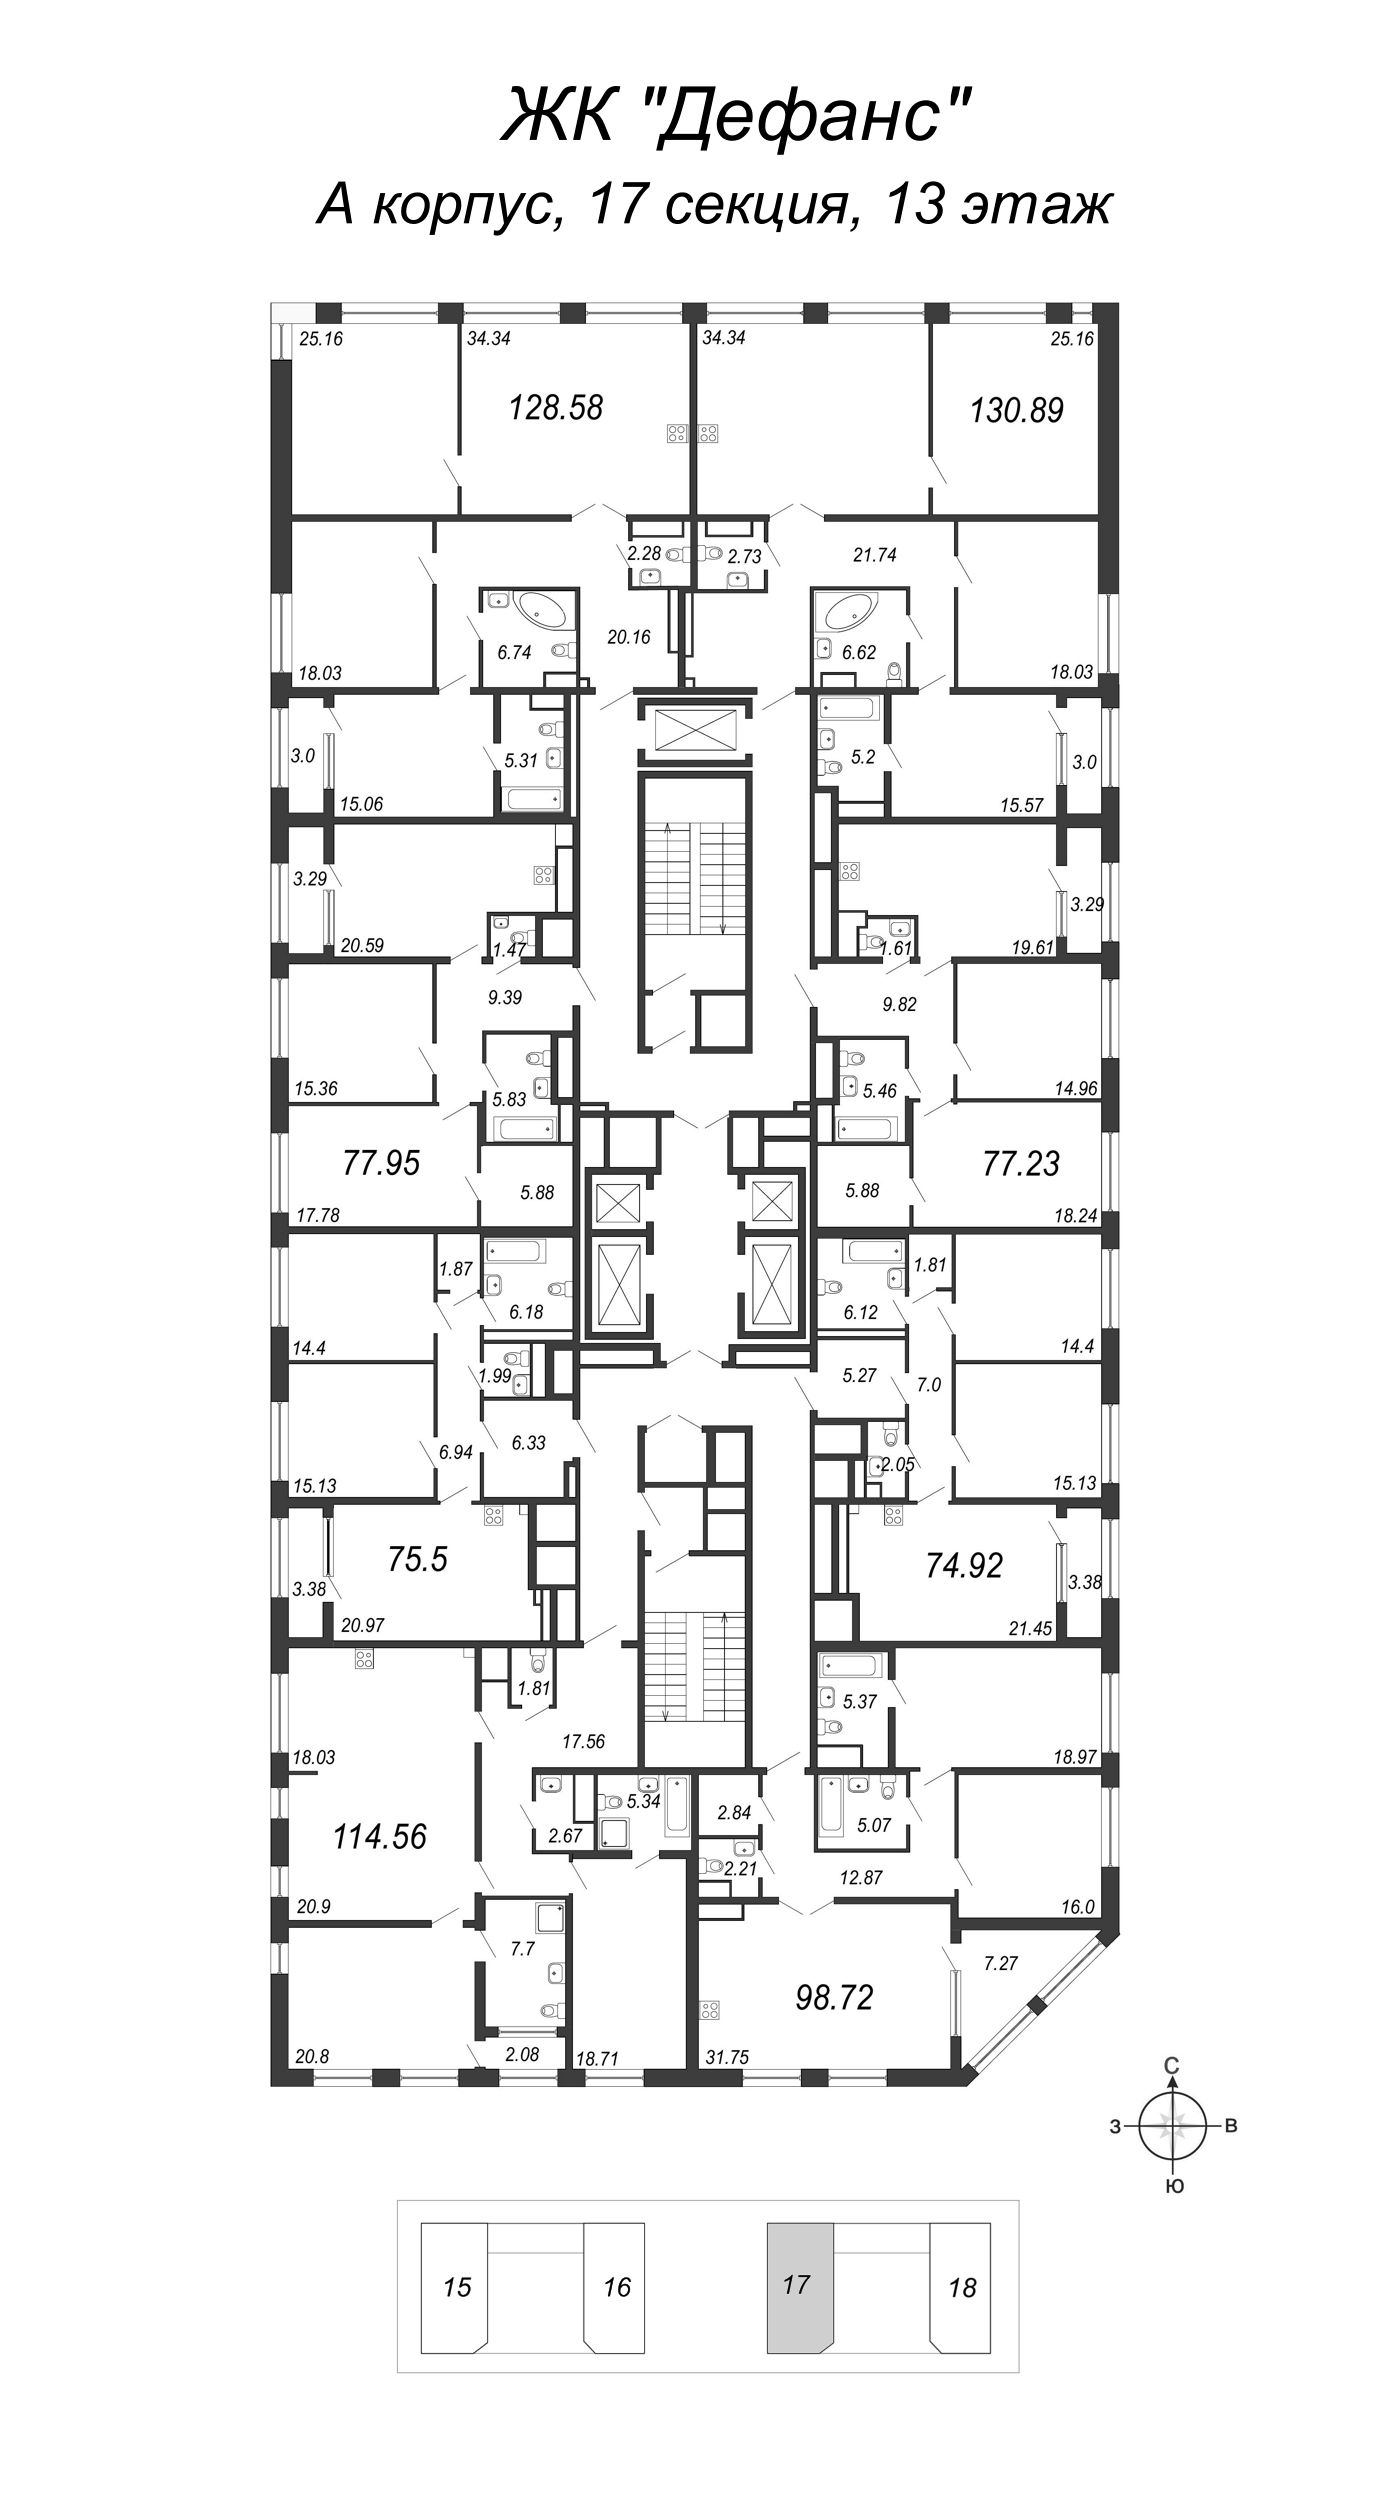 4-комнатная (Евро) квартира, 130.89 м² - планировка этажа